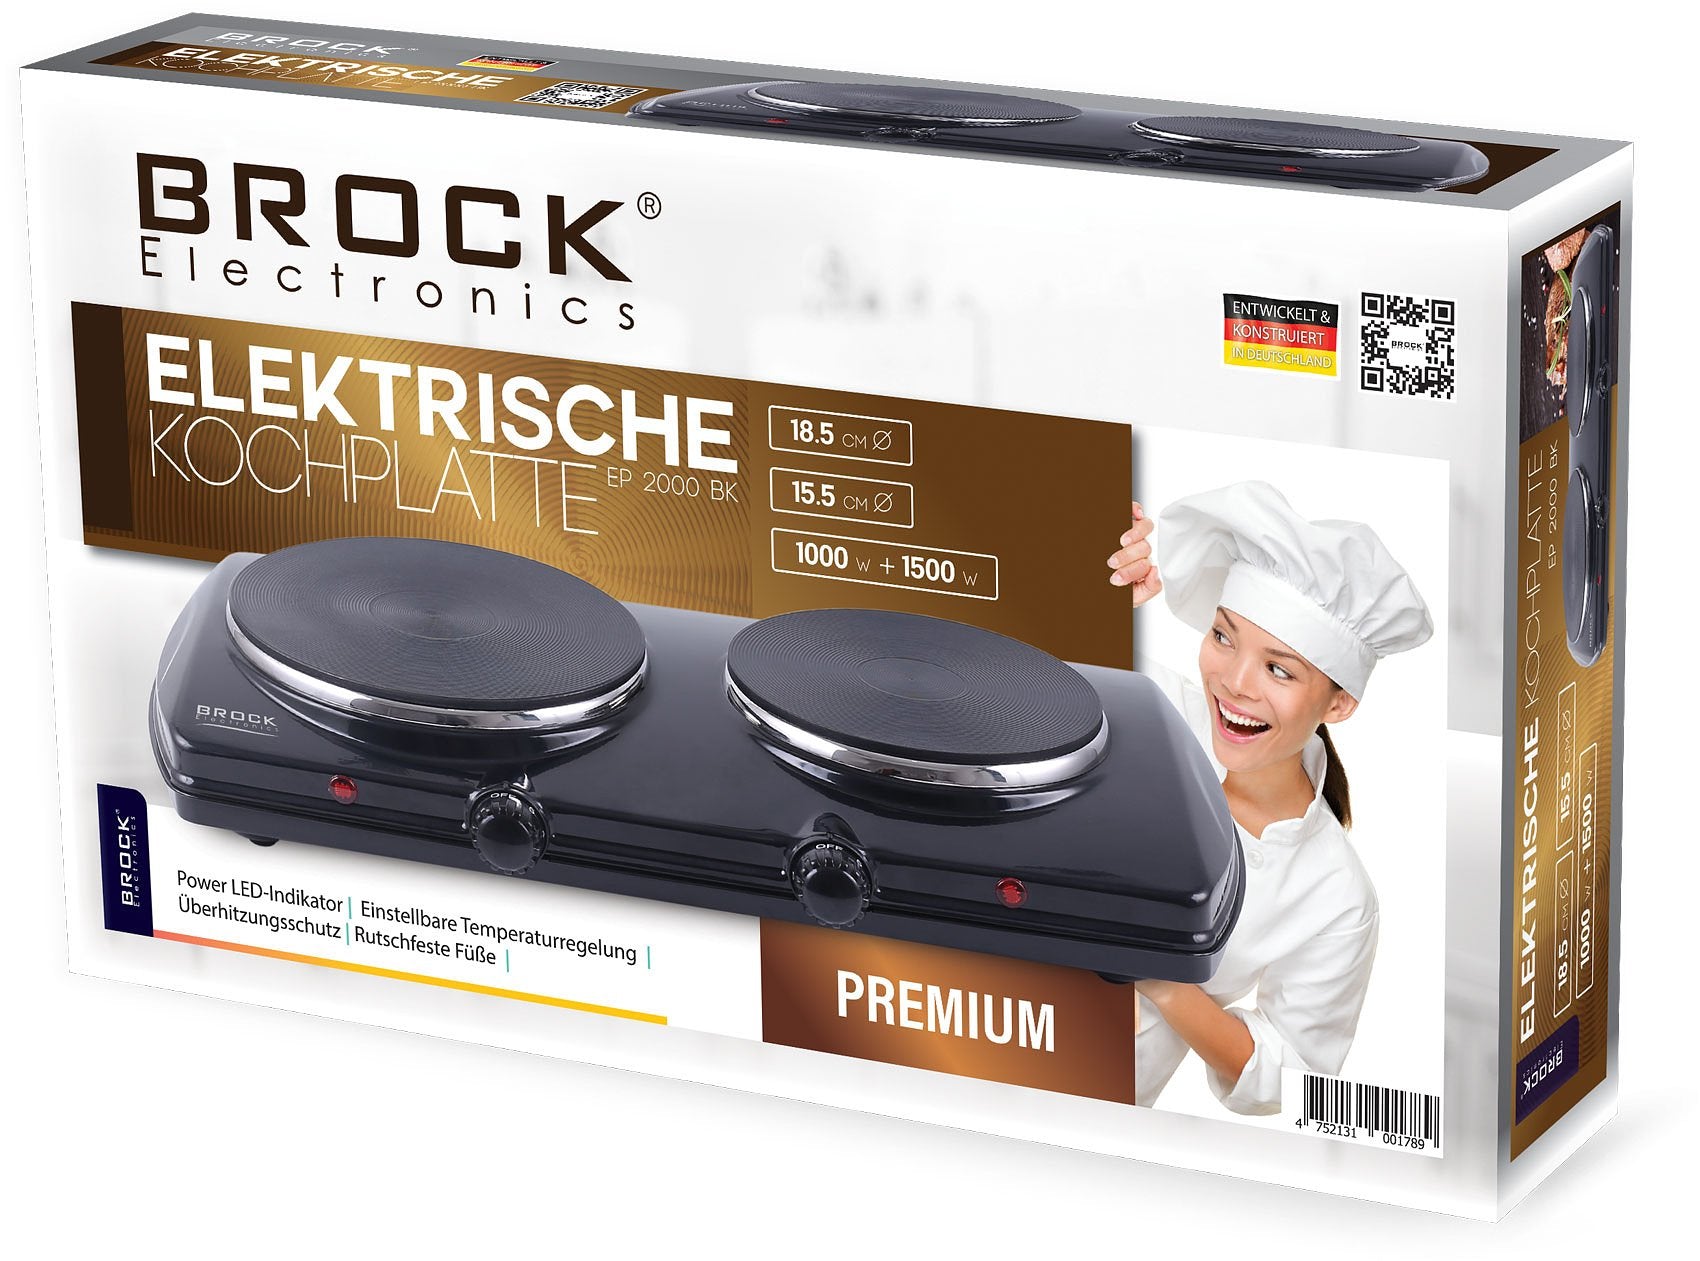 BROCK Electronics Elektrische Kookplaat EP 2000 BK (1500W + 1000W, Ø 18,5 cm + Ø 15,5 cm)